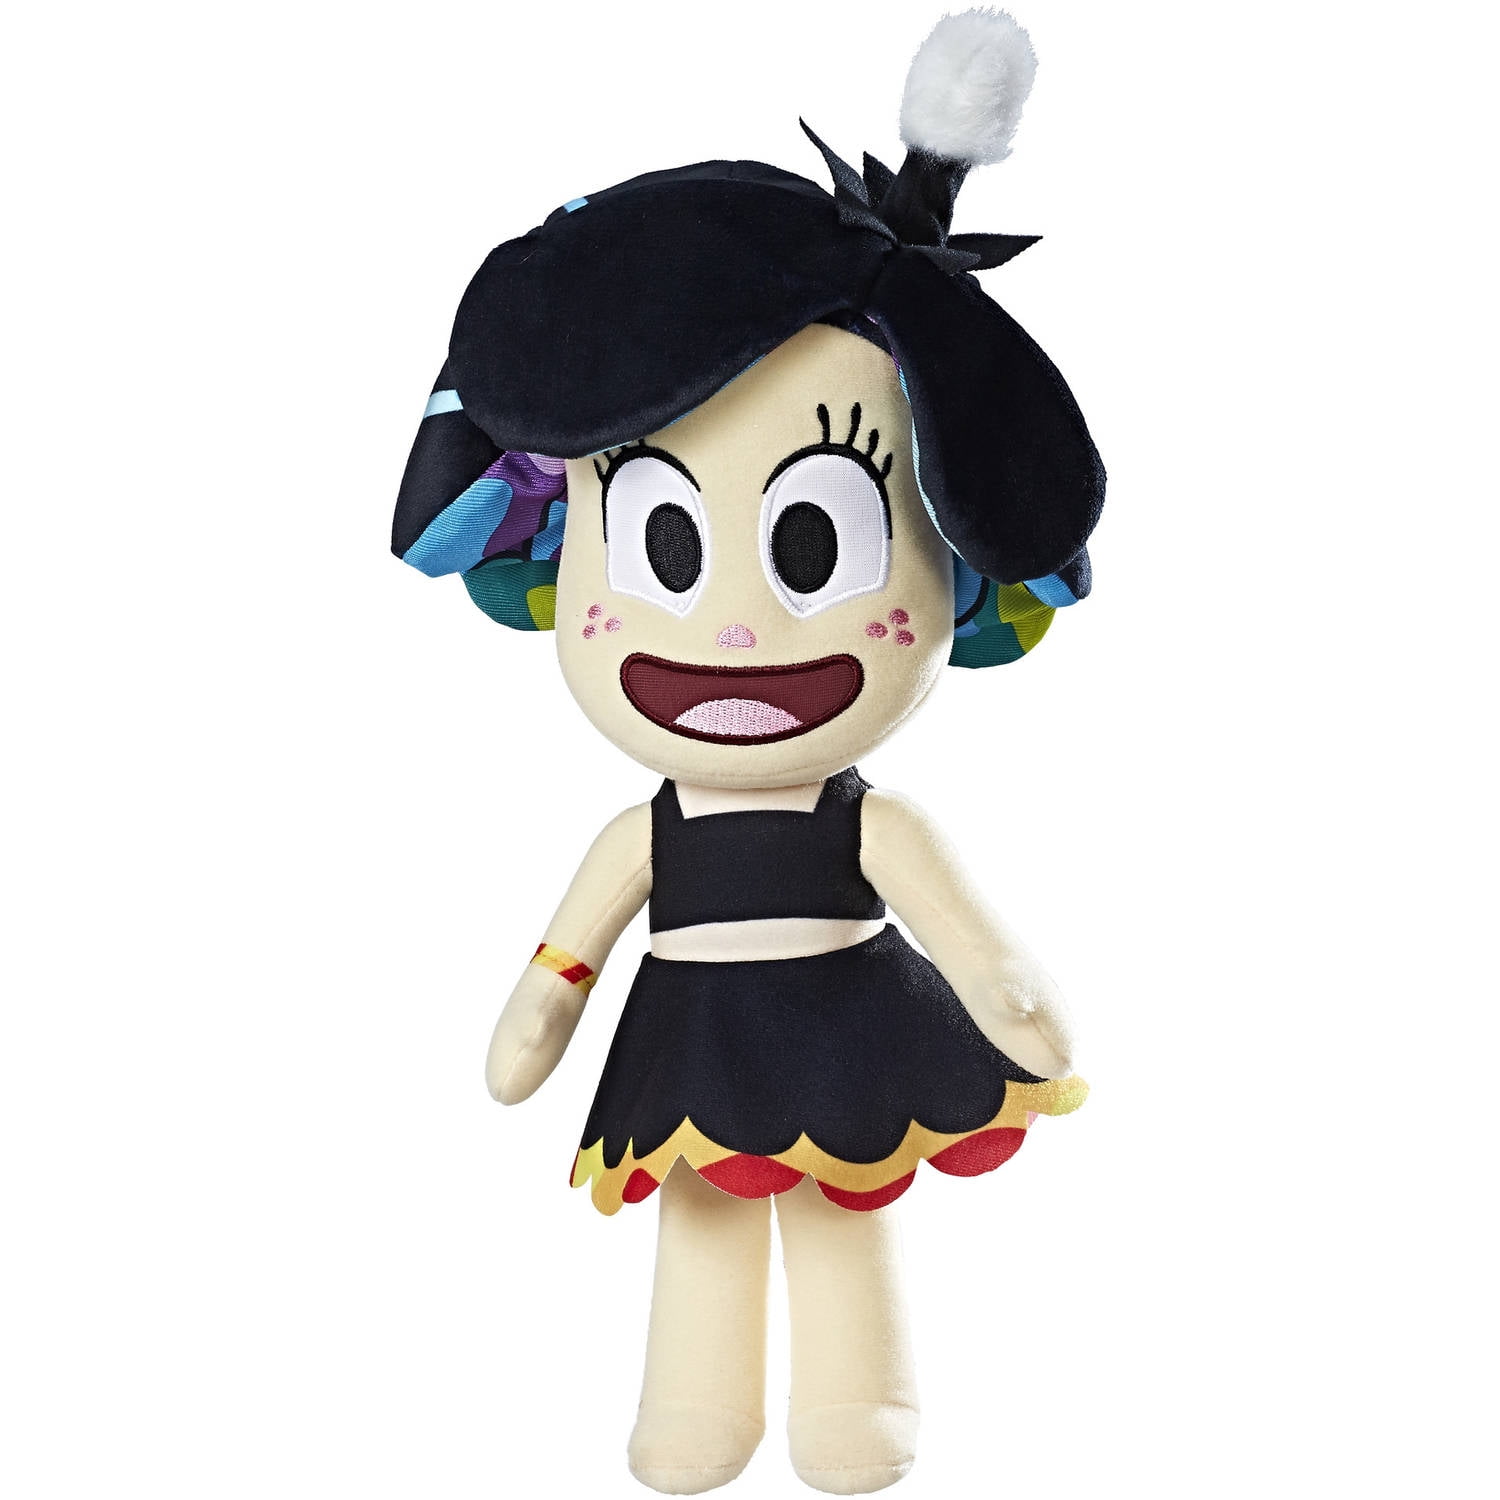 Hanazuki Light-Up Plush Doll - Walmart.com